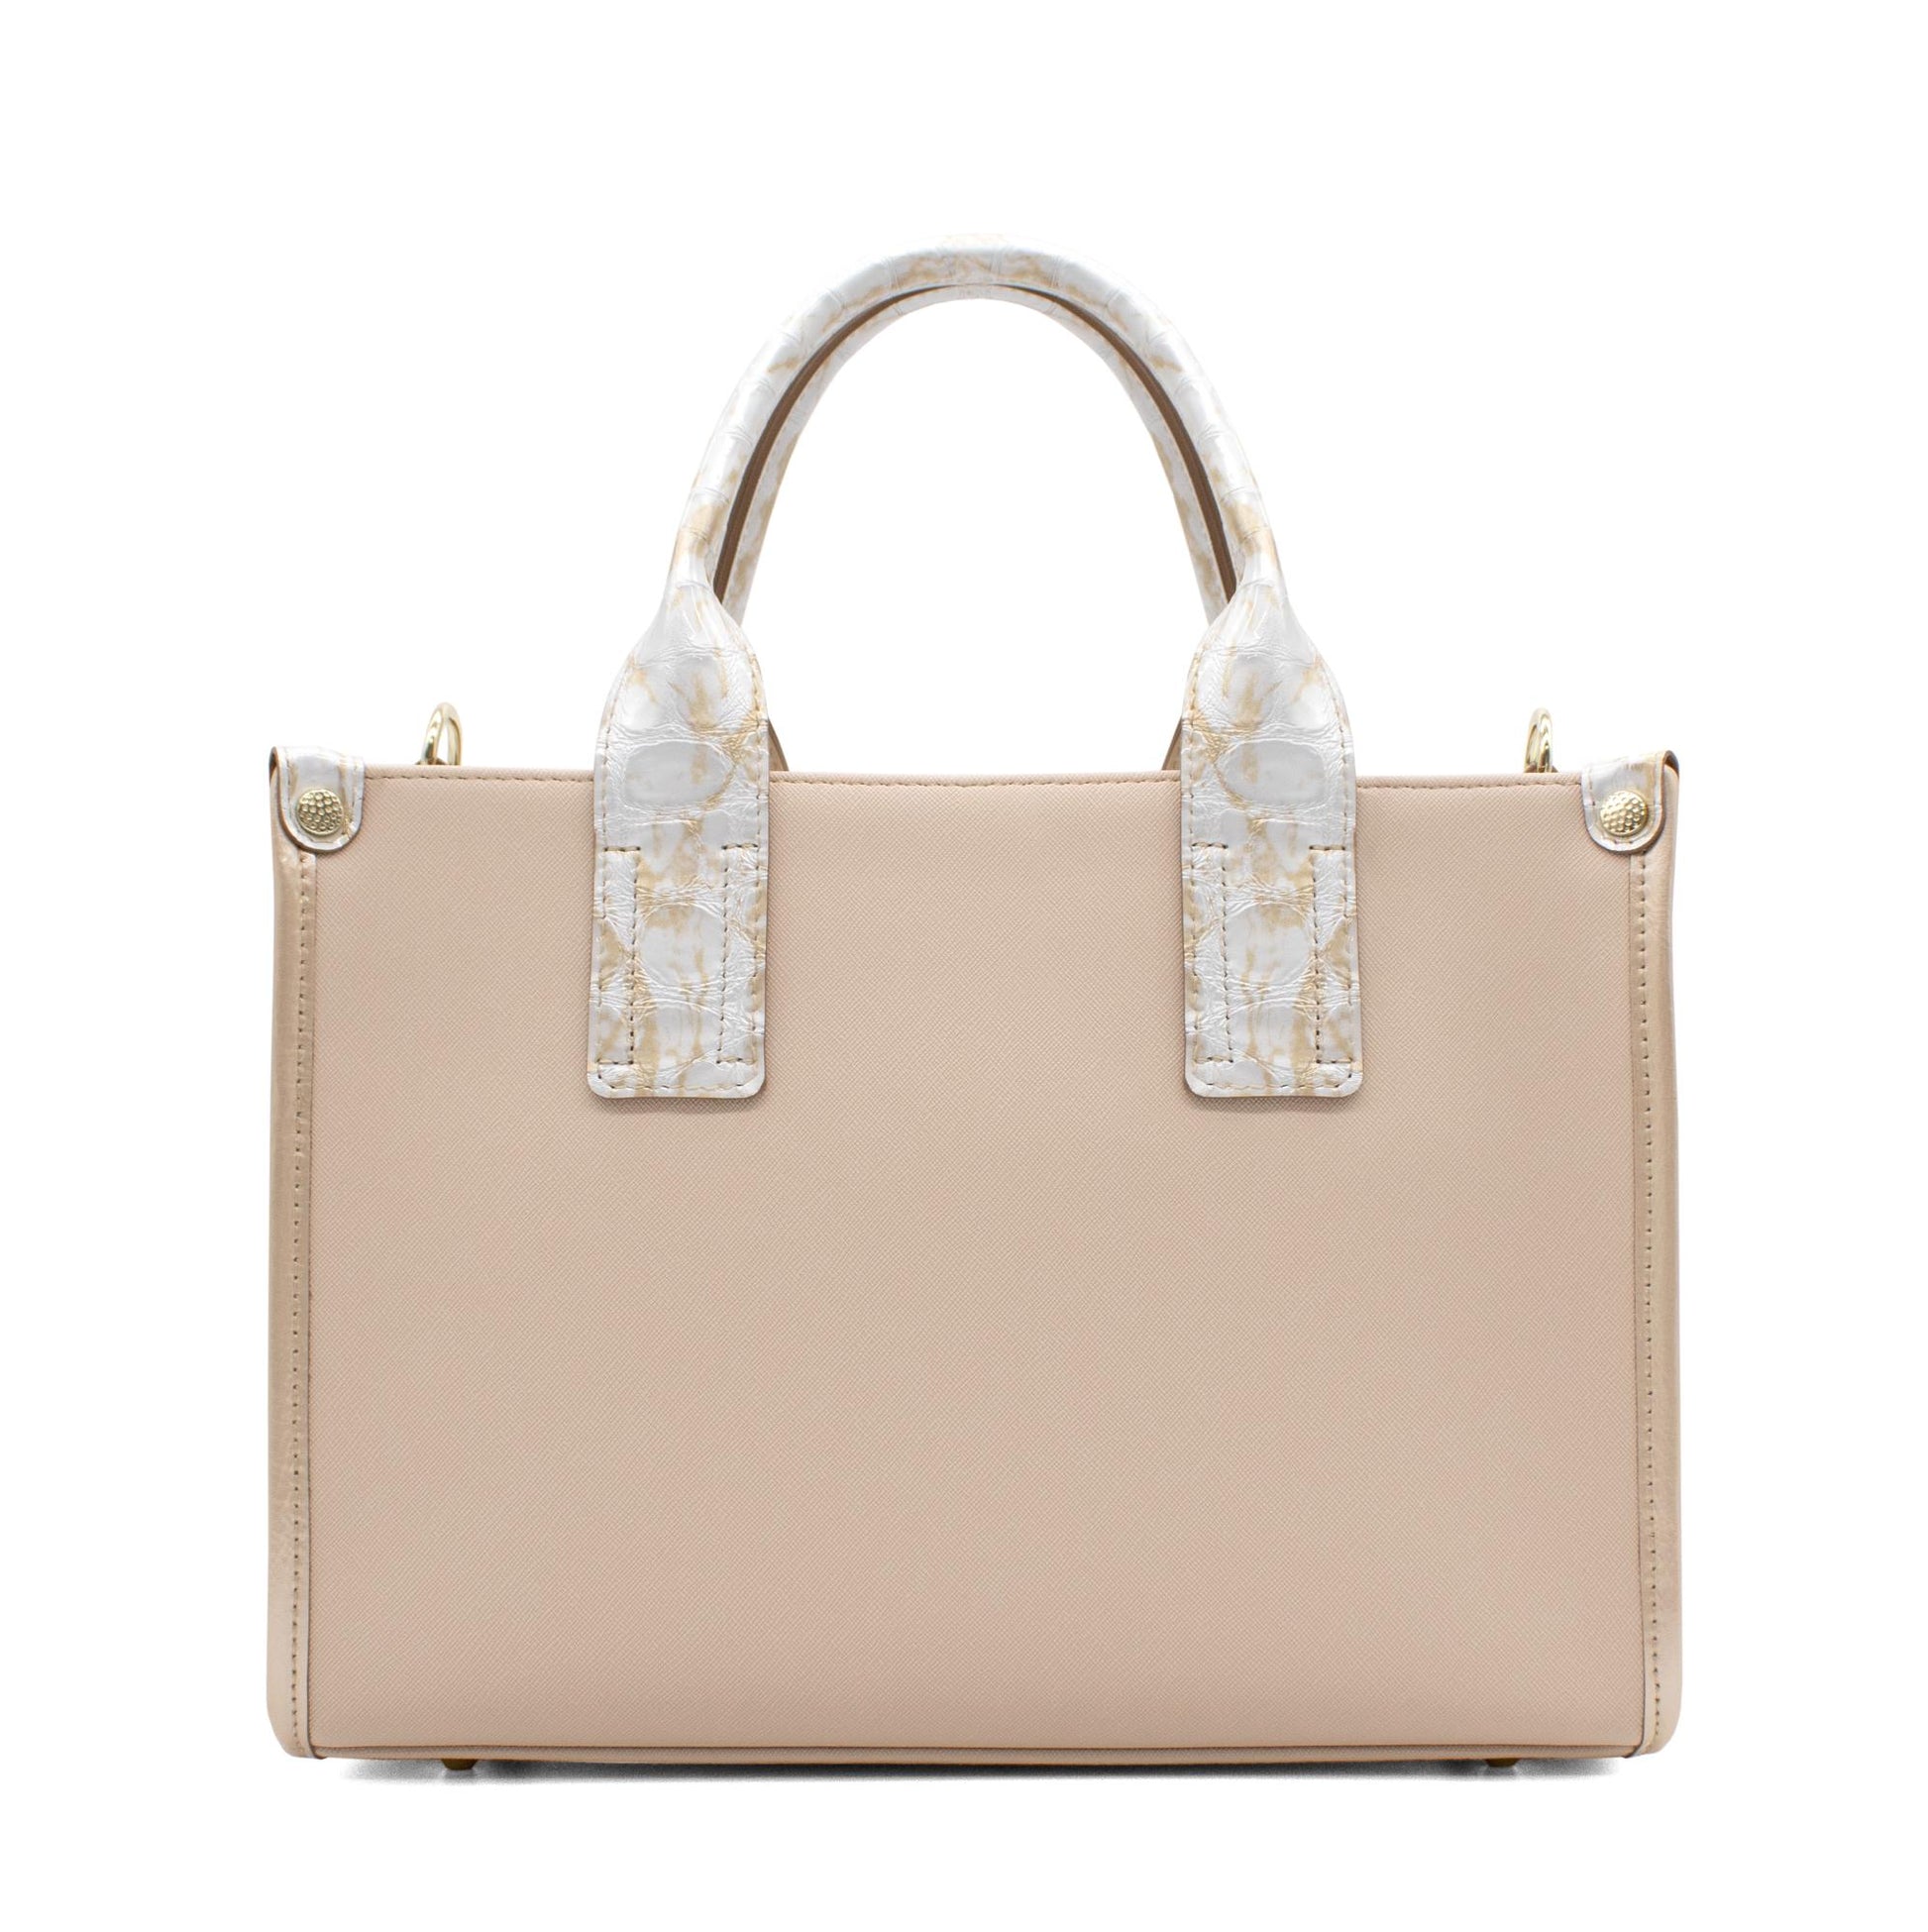 Cavalinho Mystic Handbag - Beige / White - 18460479.31_4